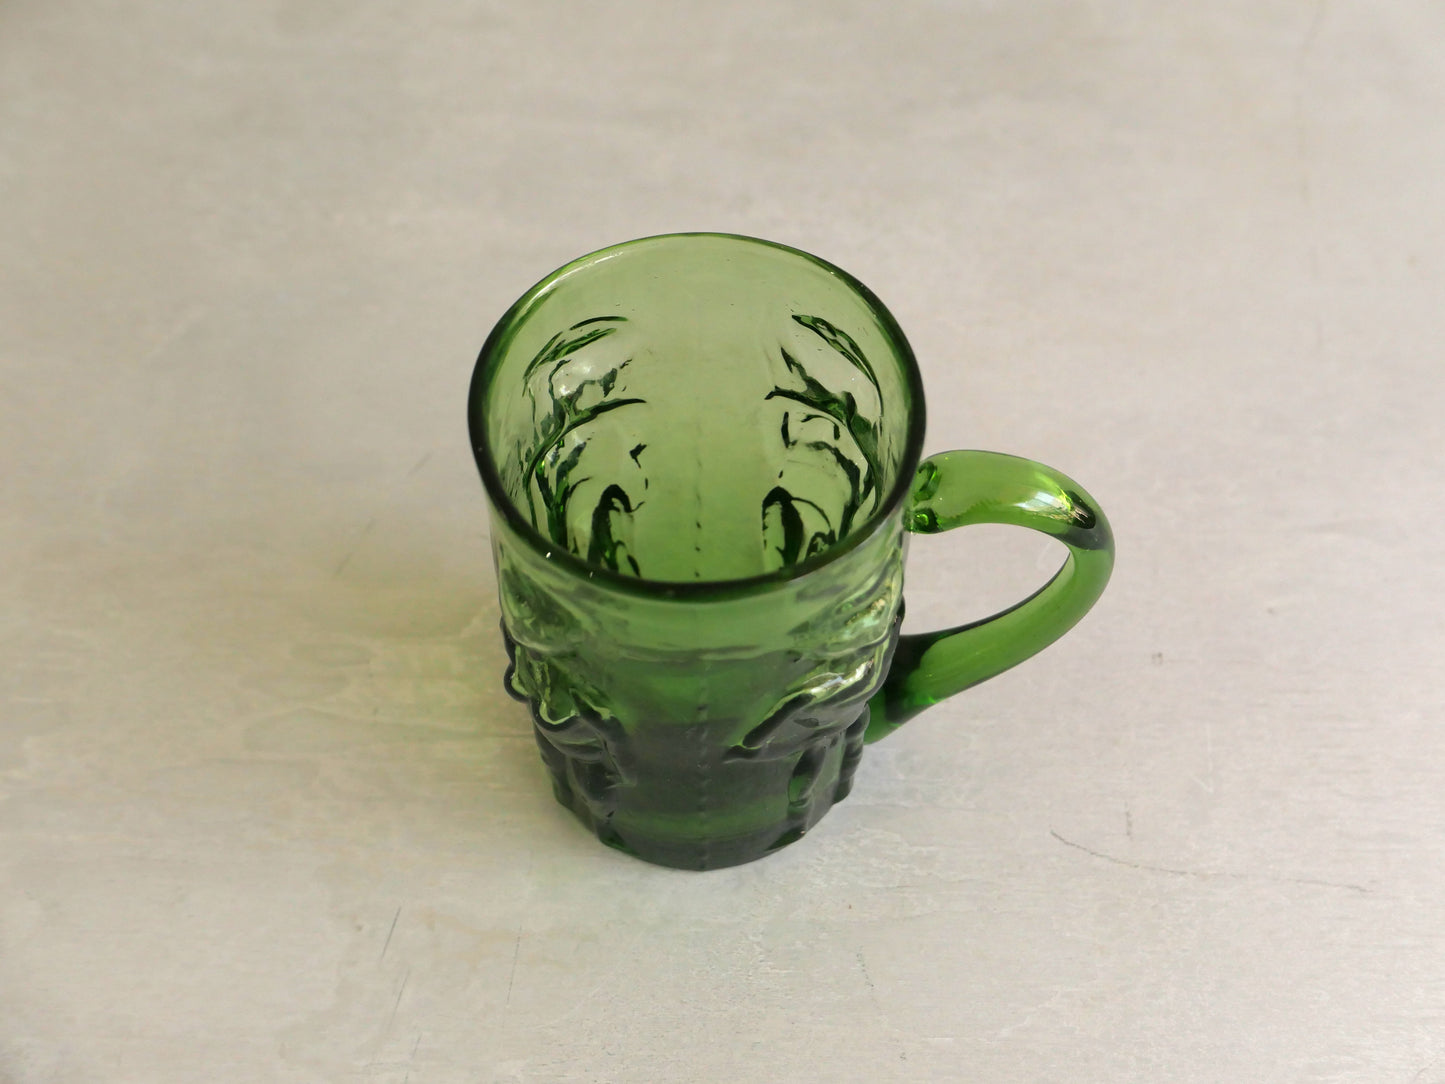 Green Beer/Mug Glass  from Sweden 1960s